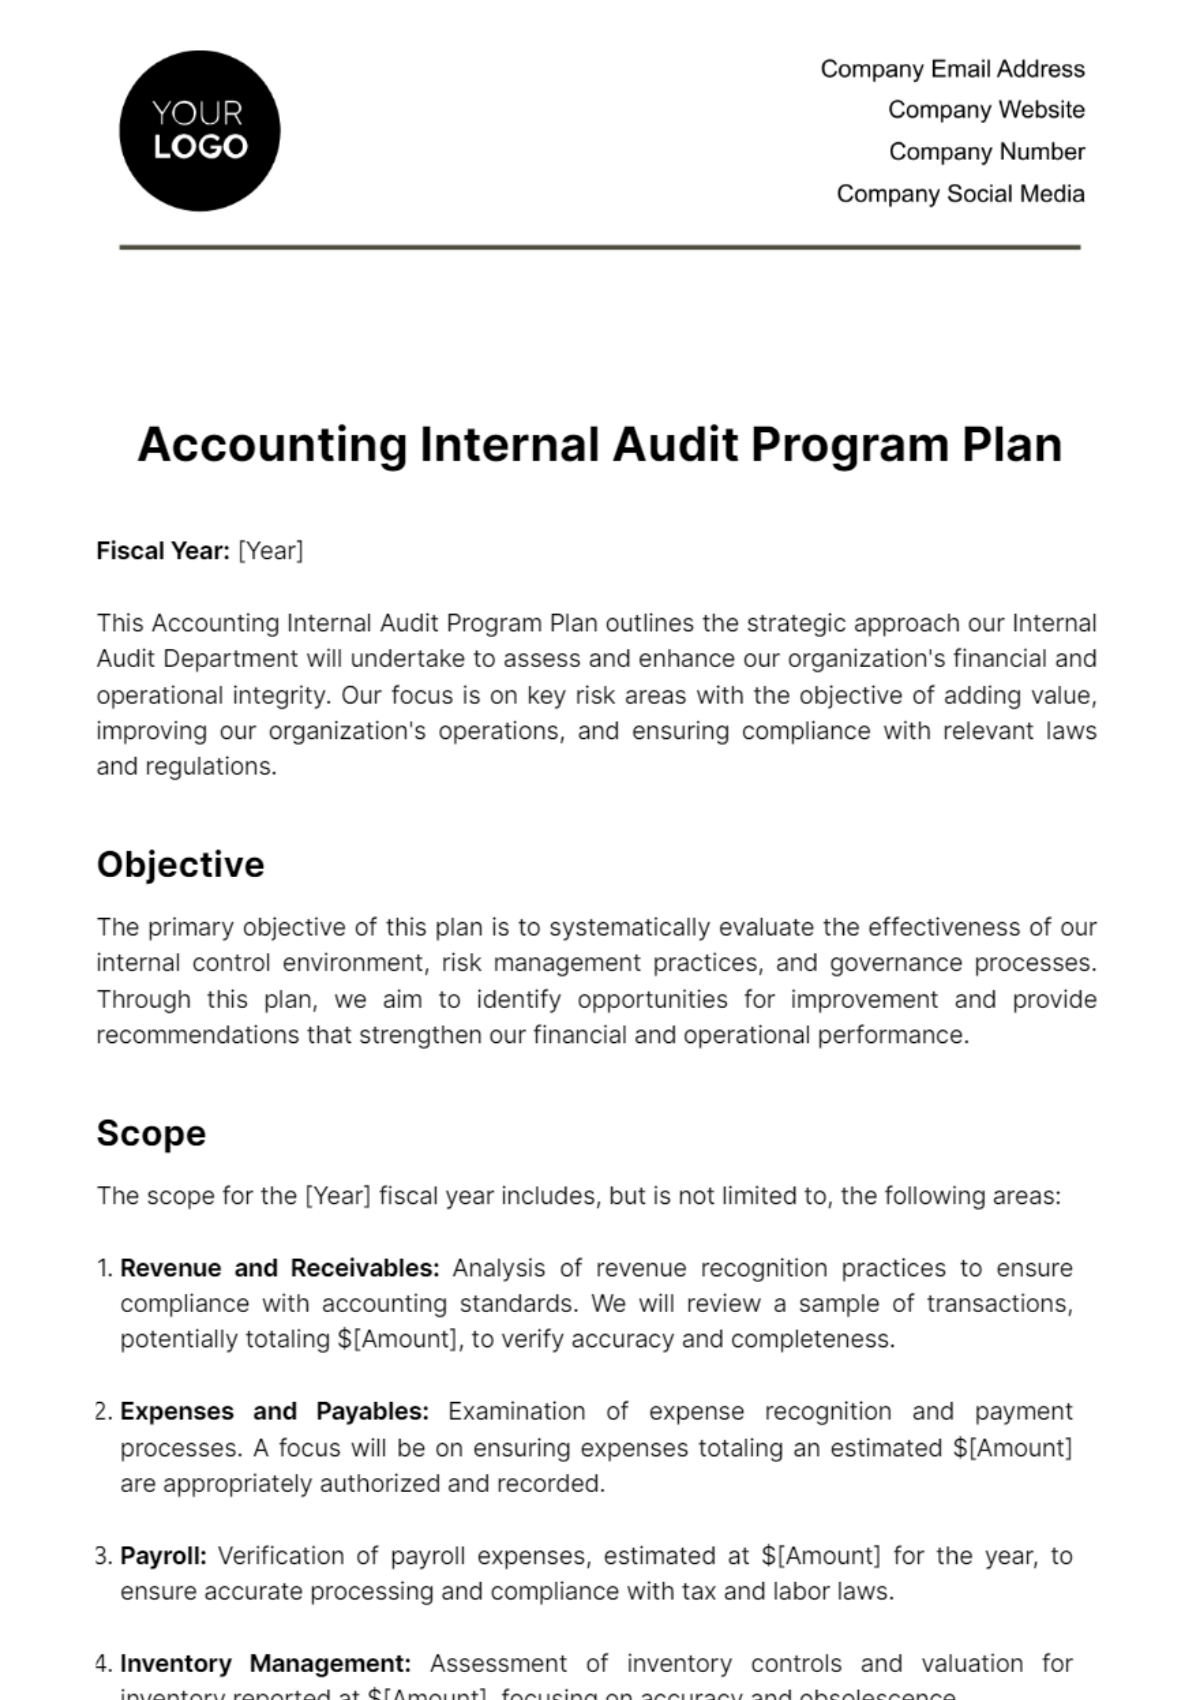 Free Accounting Internal Audit Program Plan Template